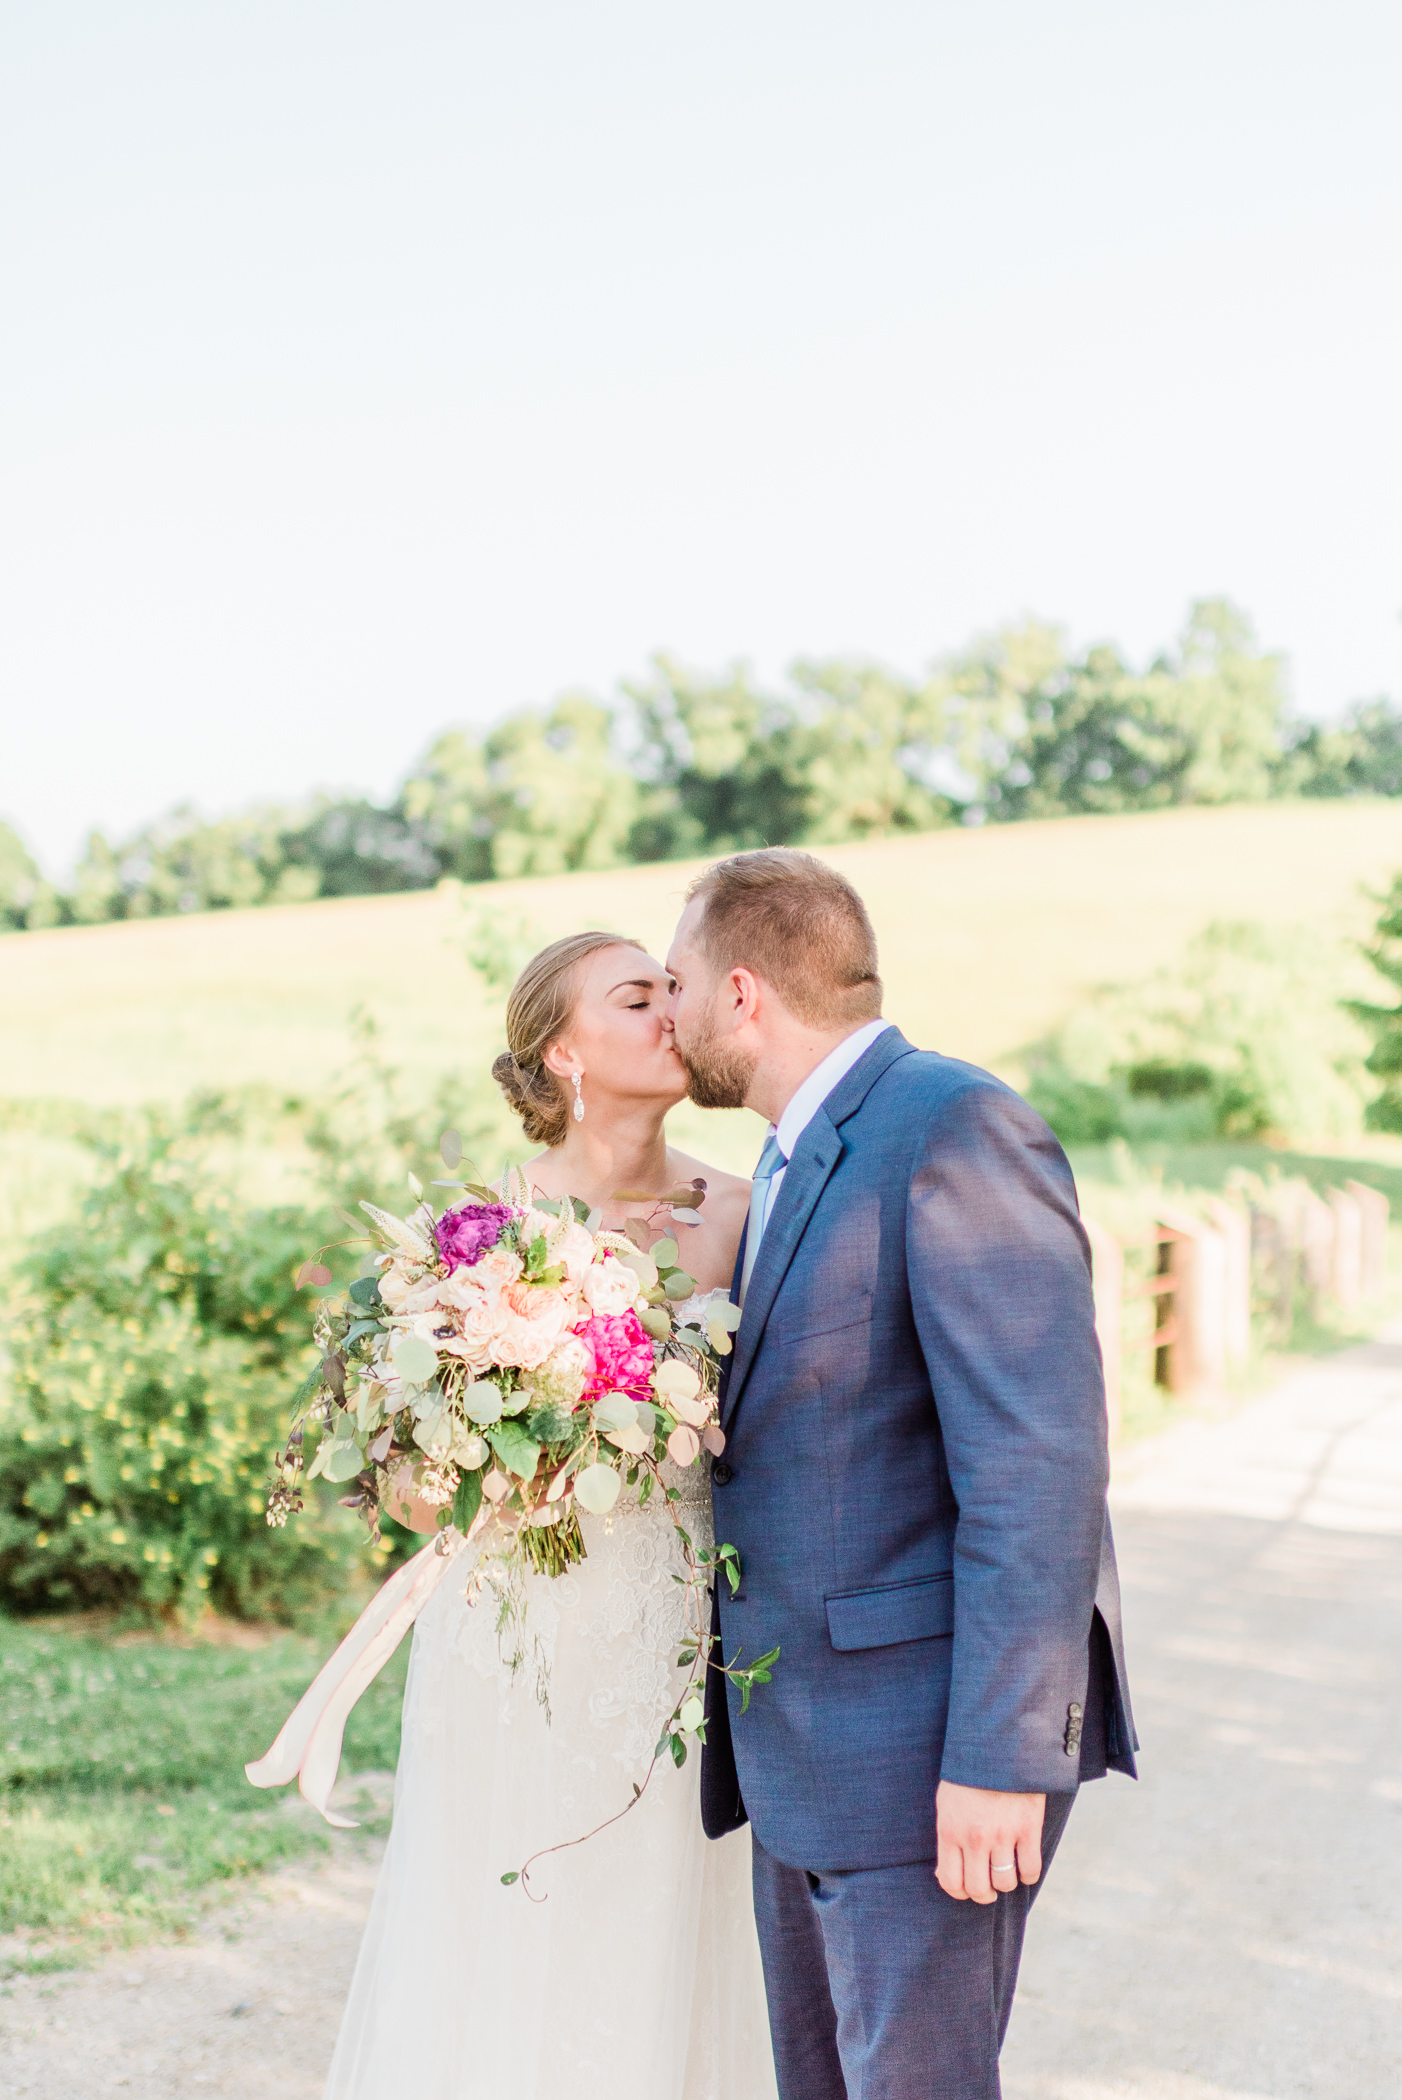 Pioneer Creek Farm Wedding Photographers - Larissa Marie Photography